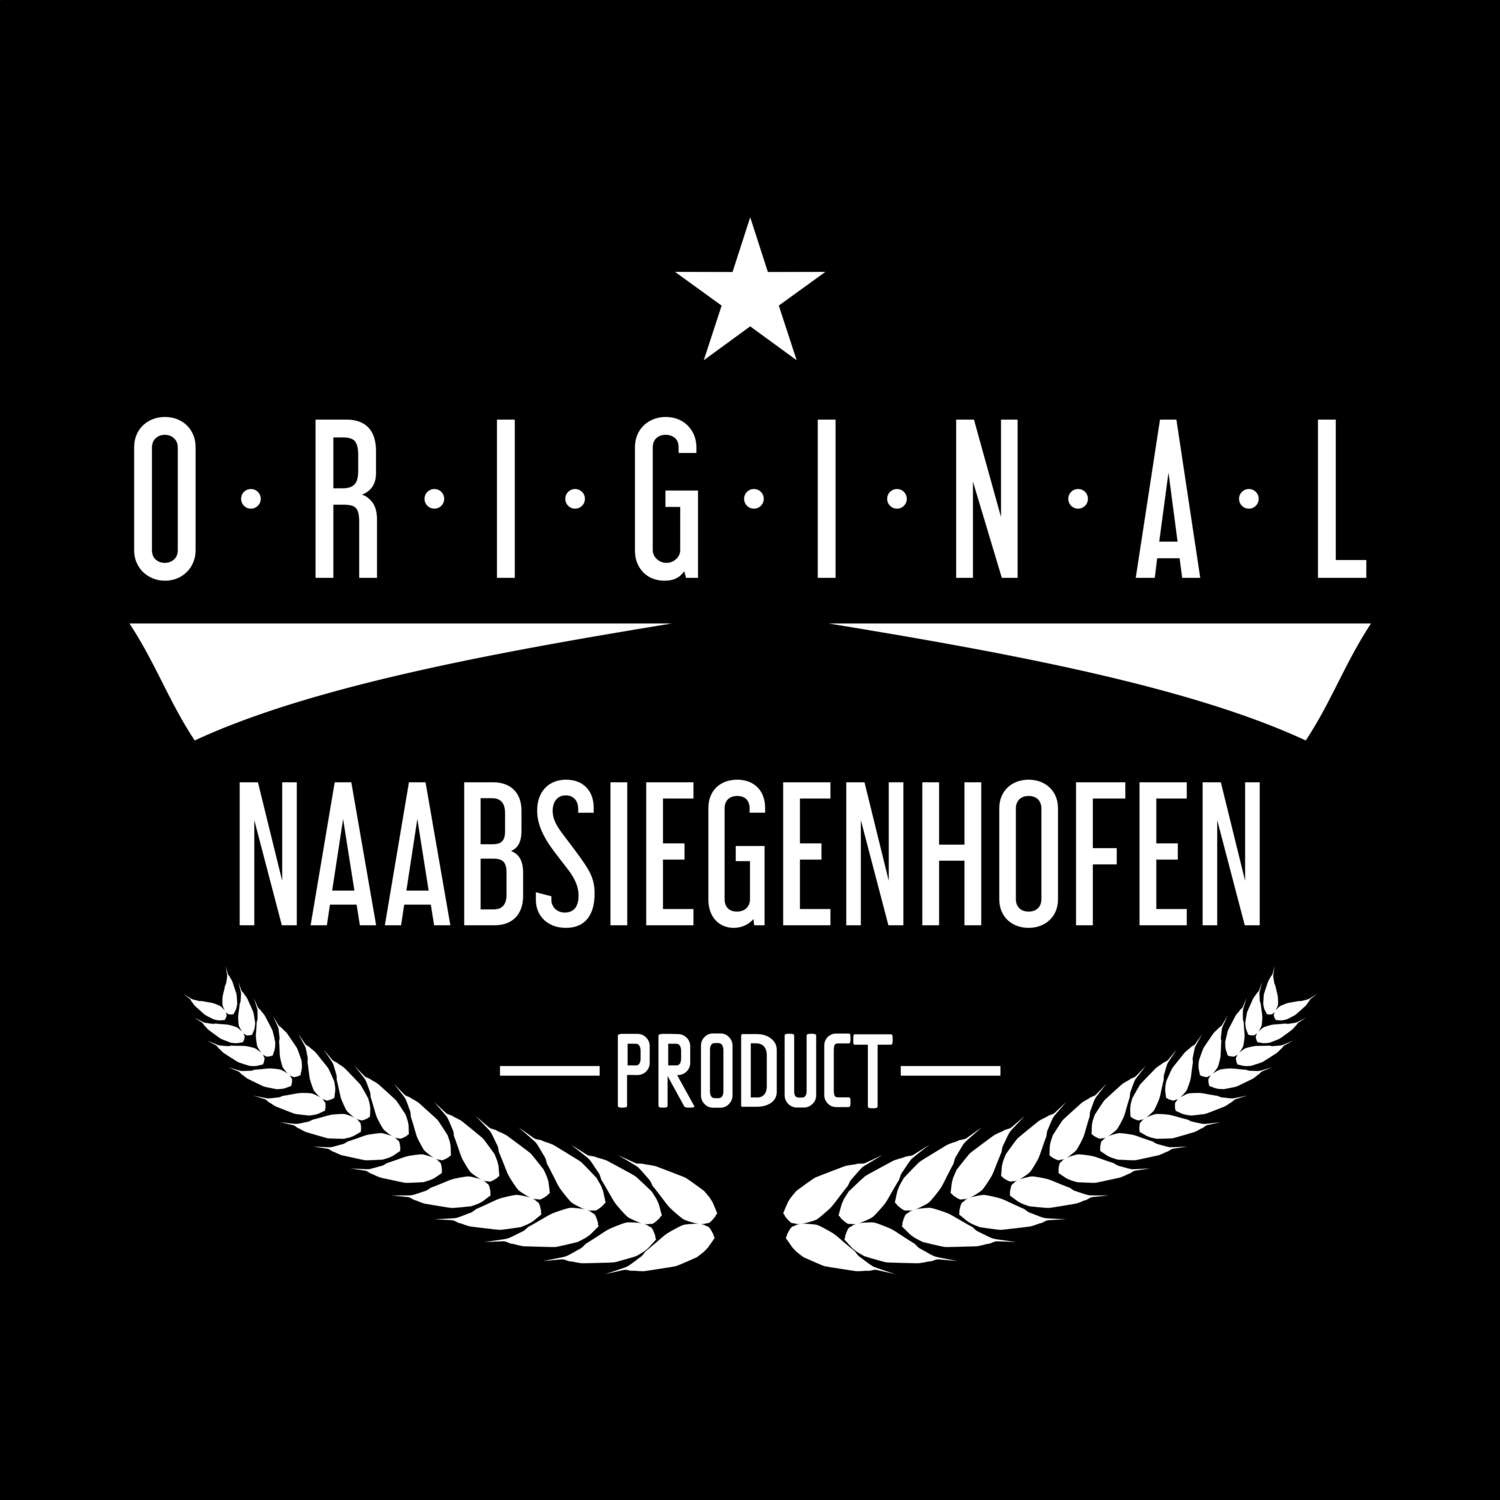 Naabsiegenhofen T-Shirt »Original Product«